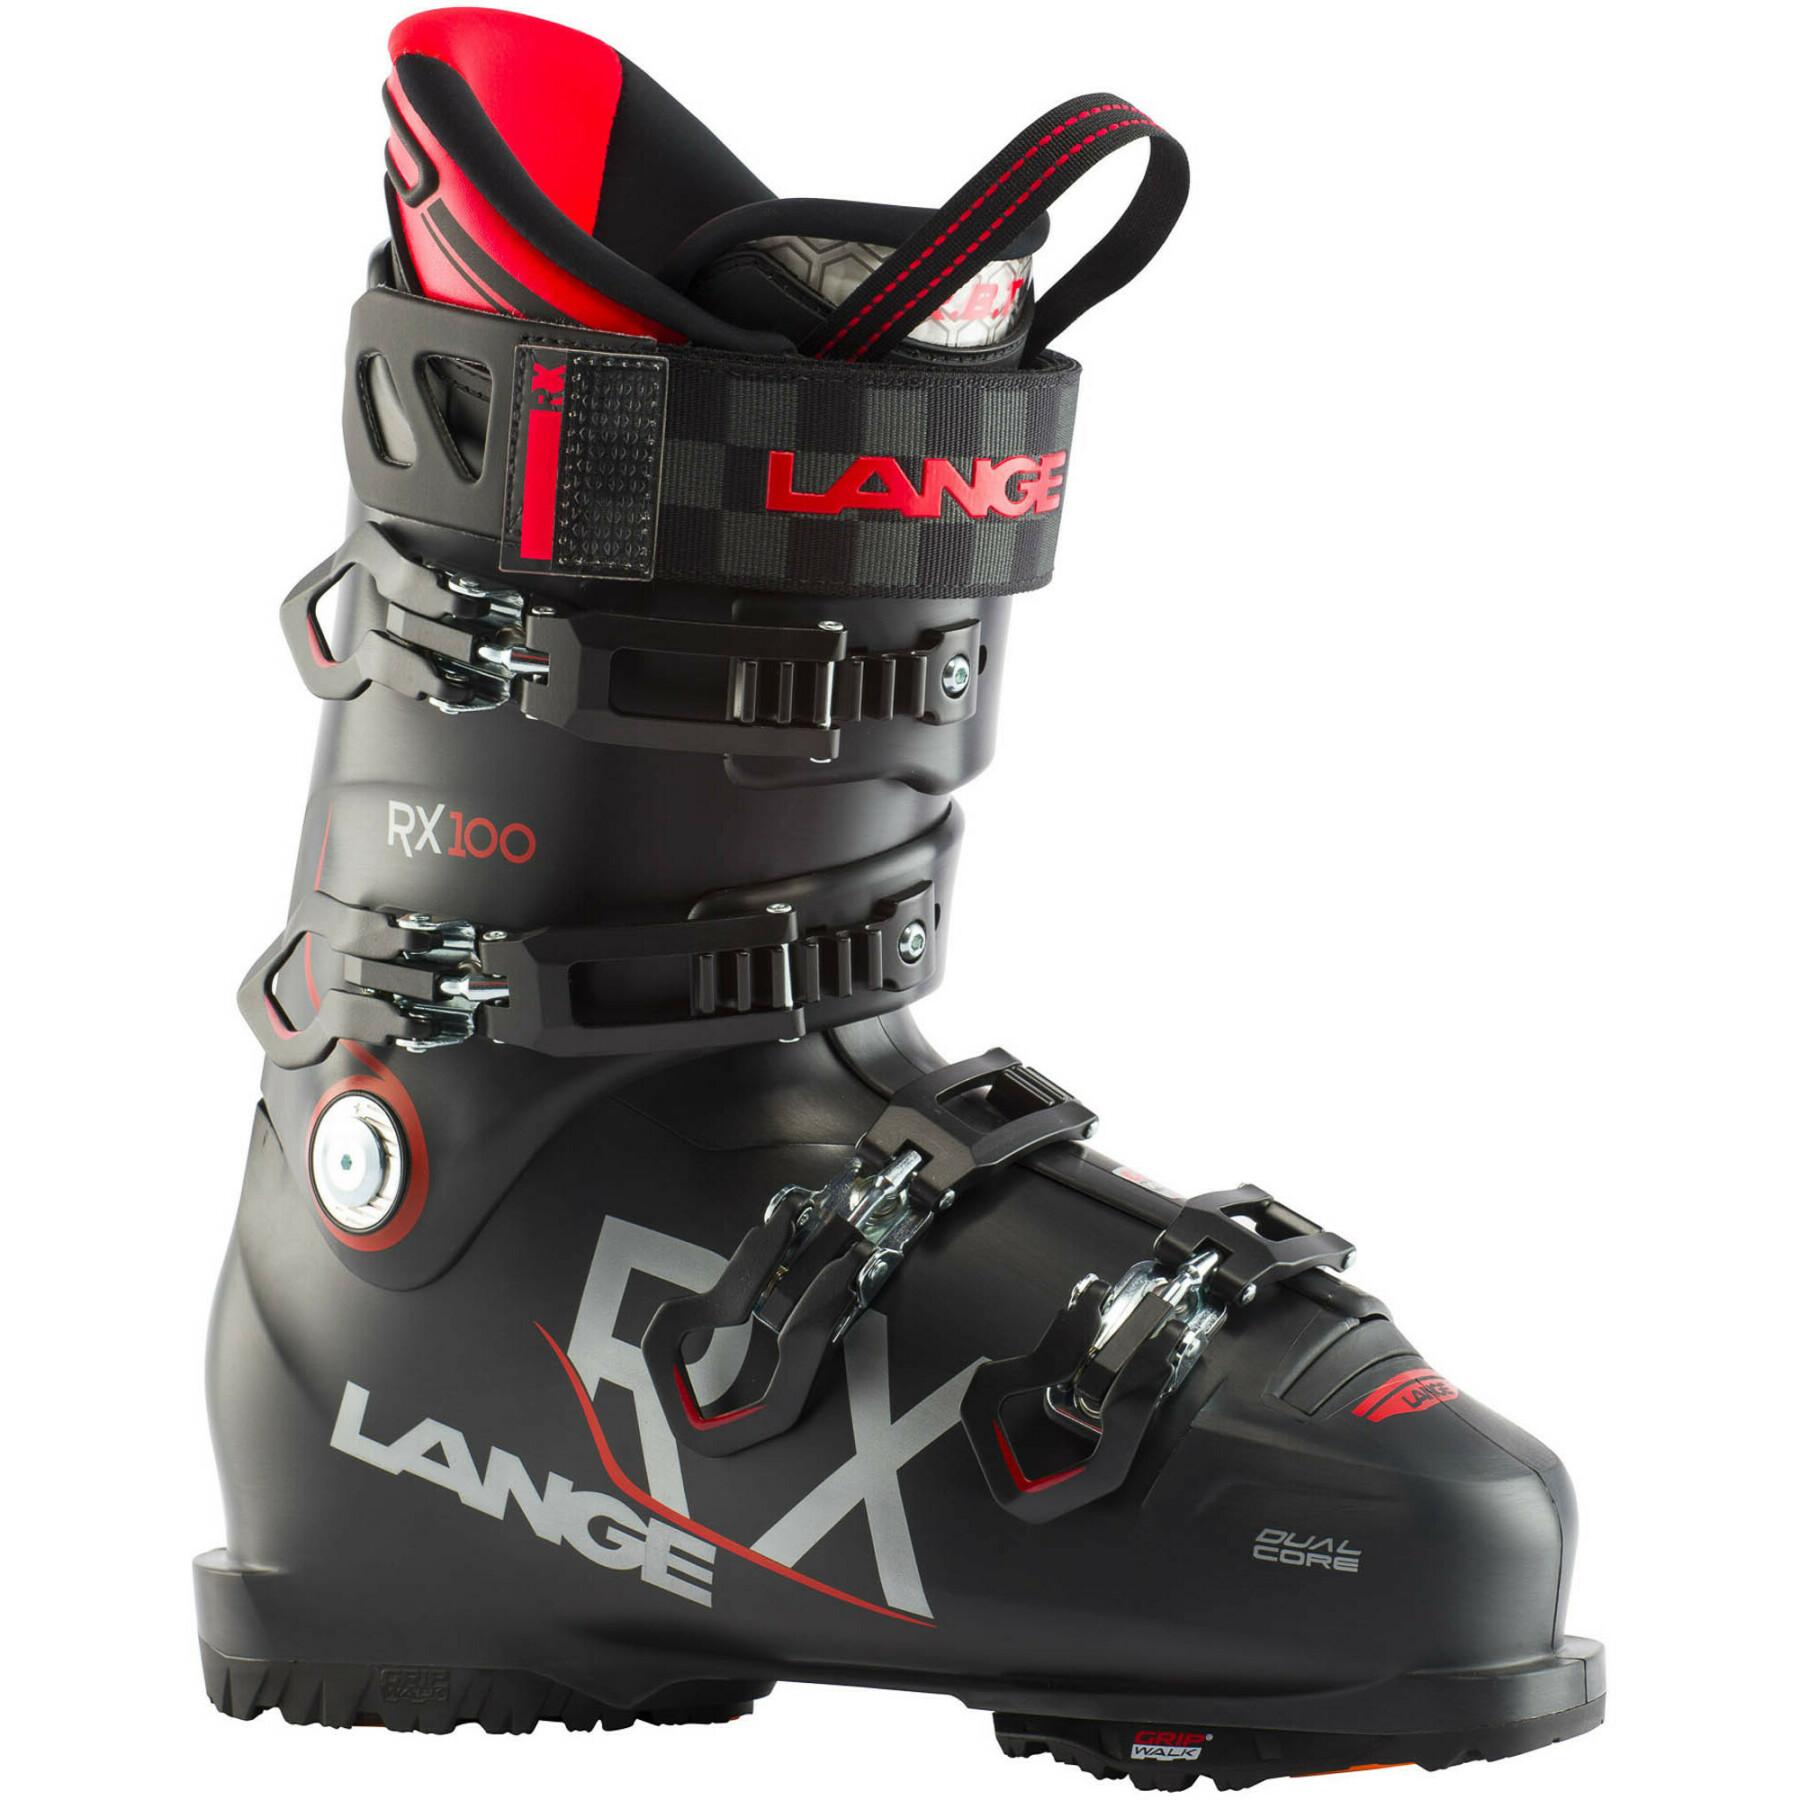 Buty narciarskie Lange Rx 100 Gw